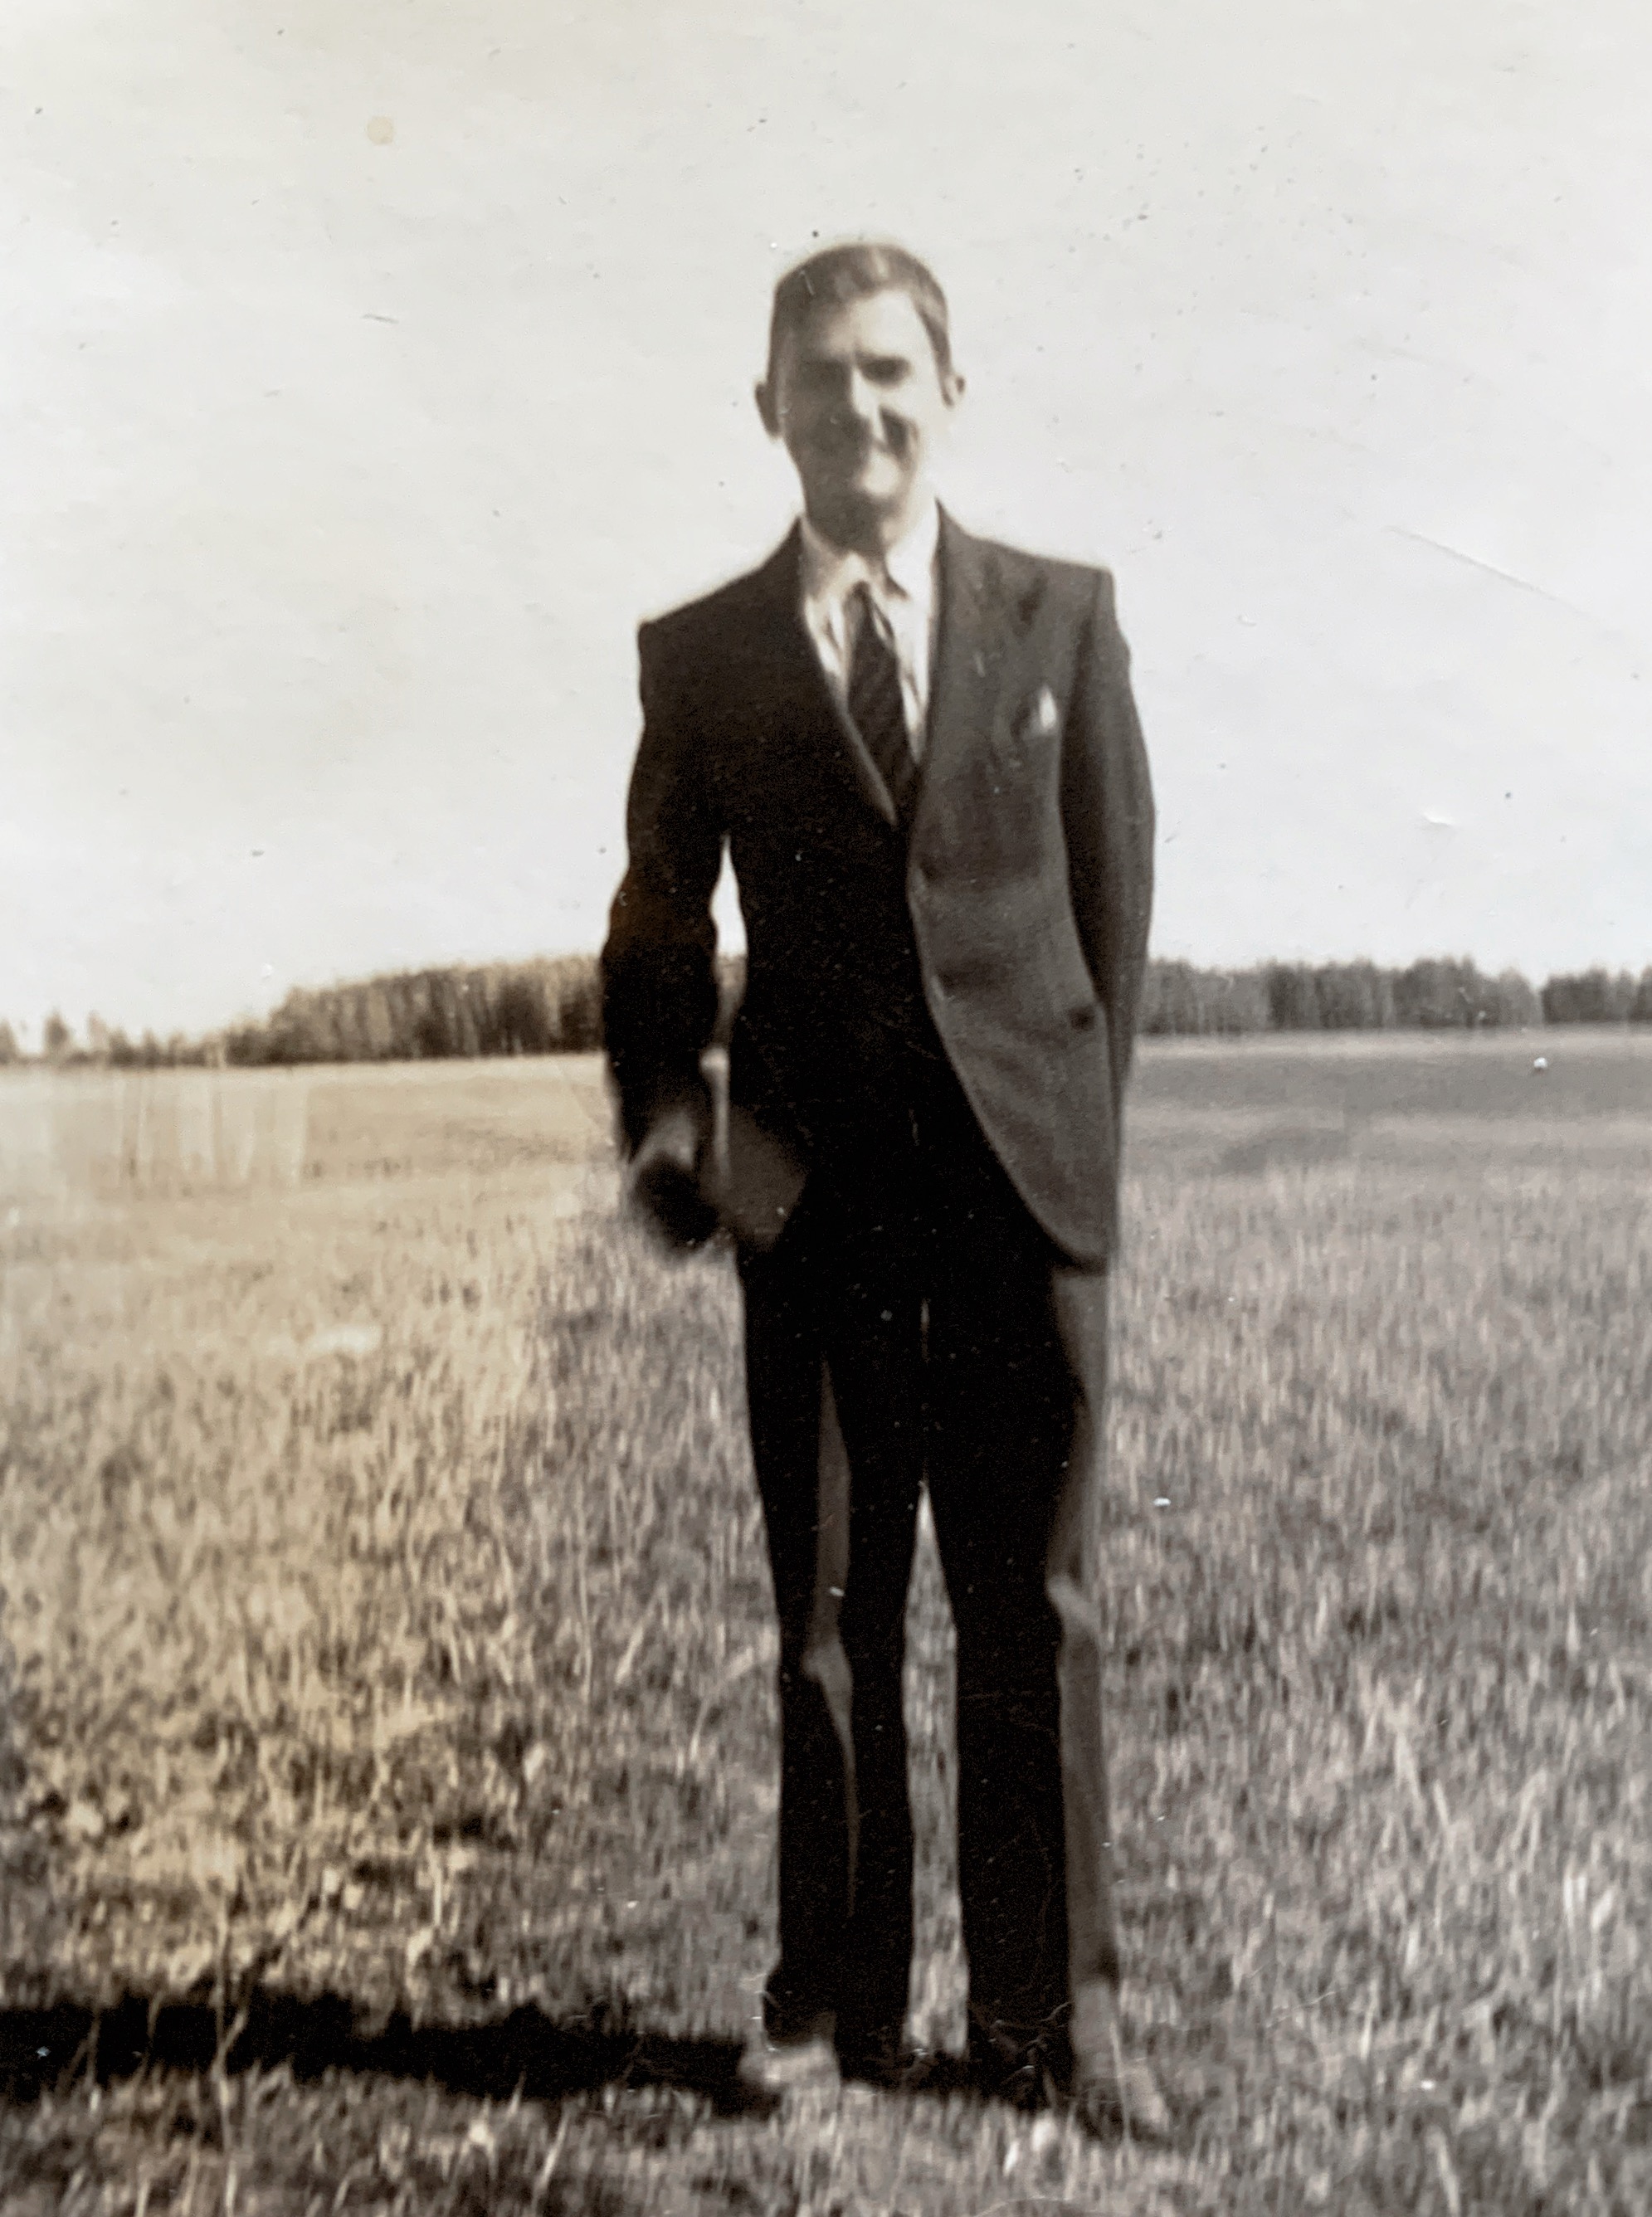 Gareld Blackburn at Florence’s confirmation and graduation 1937